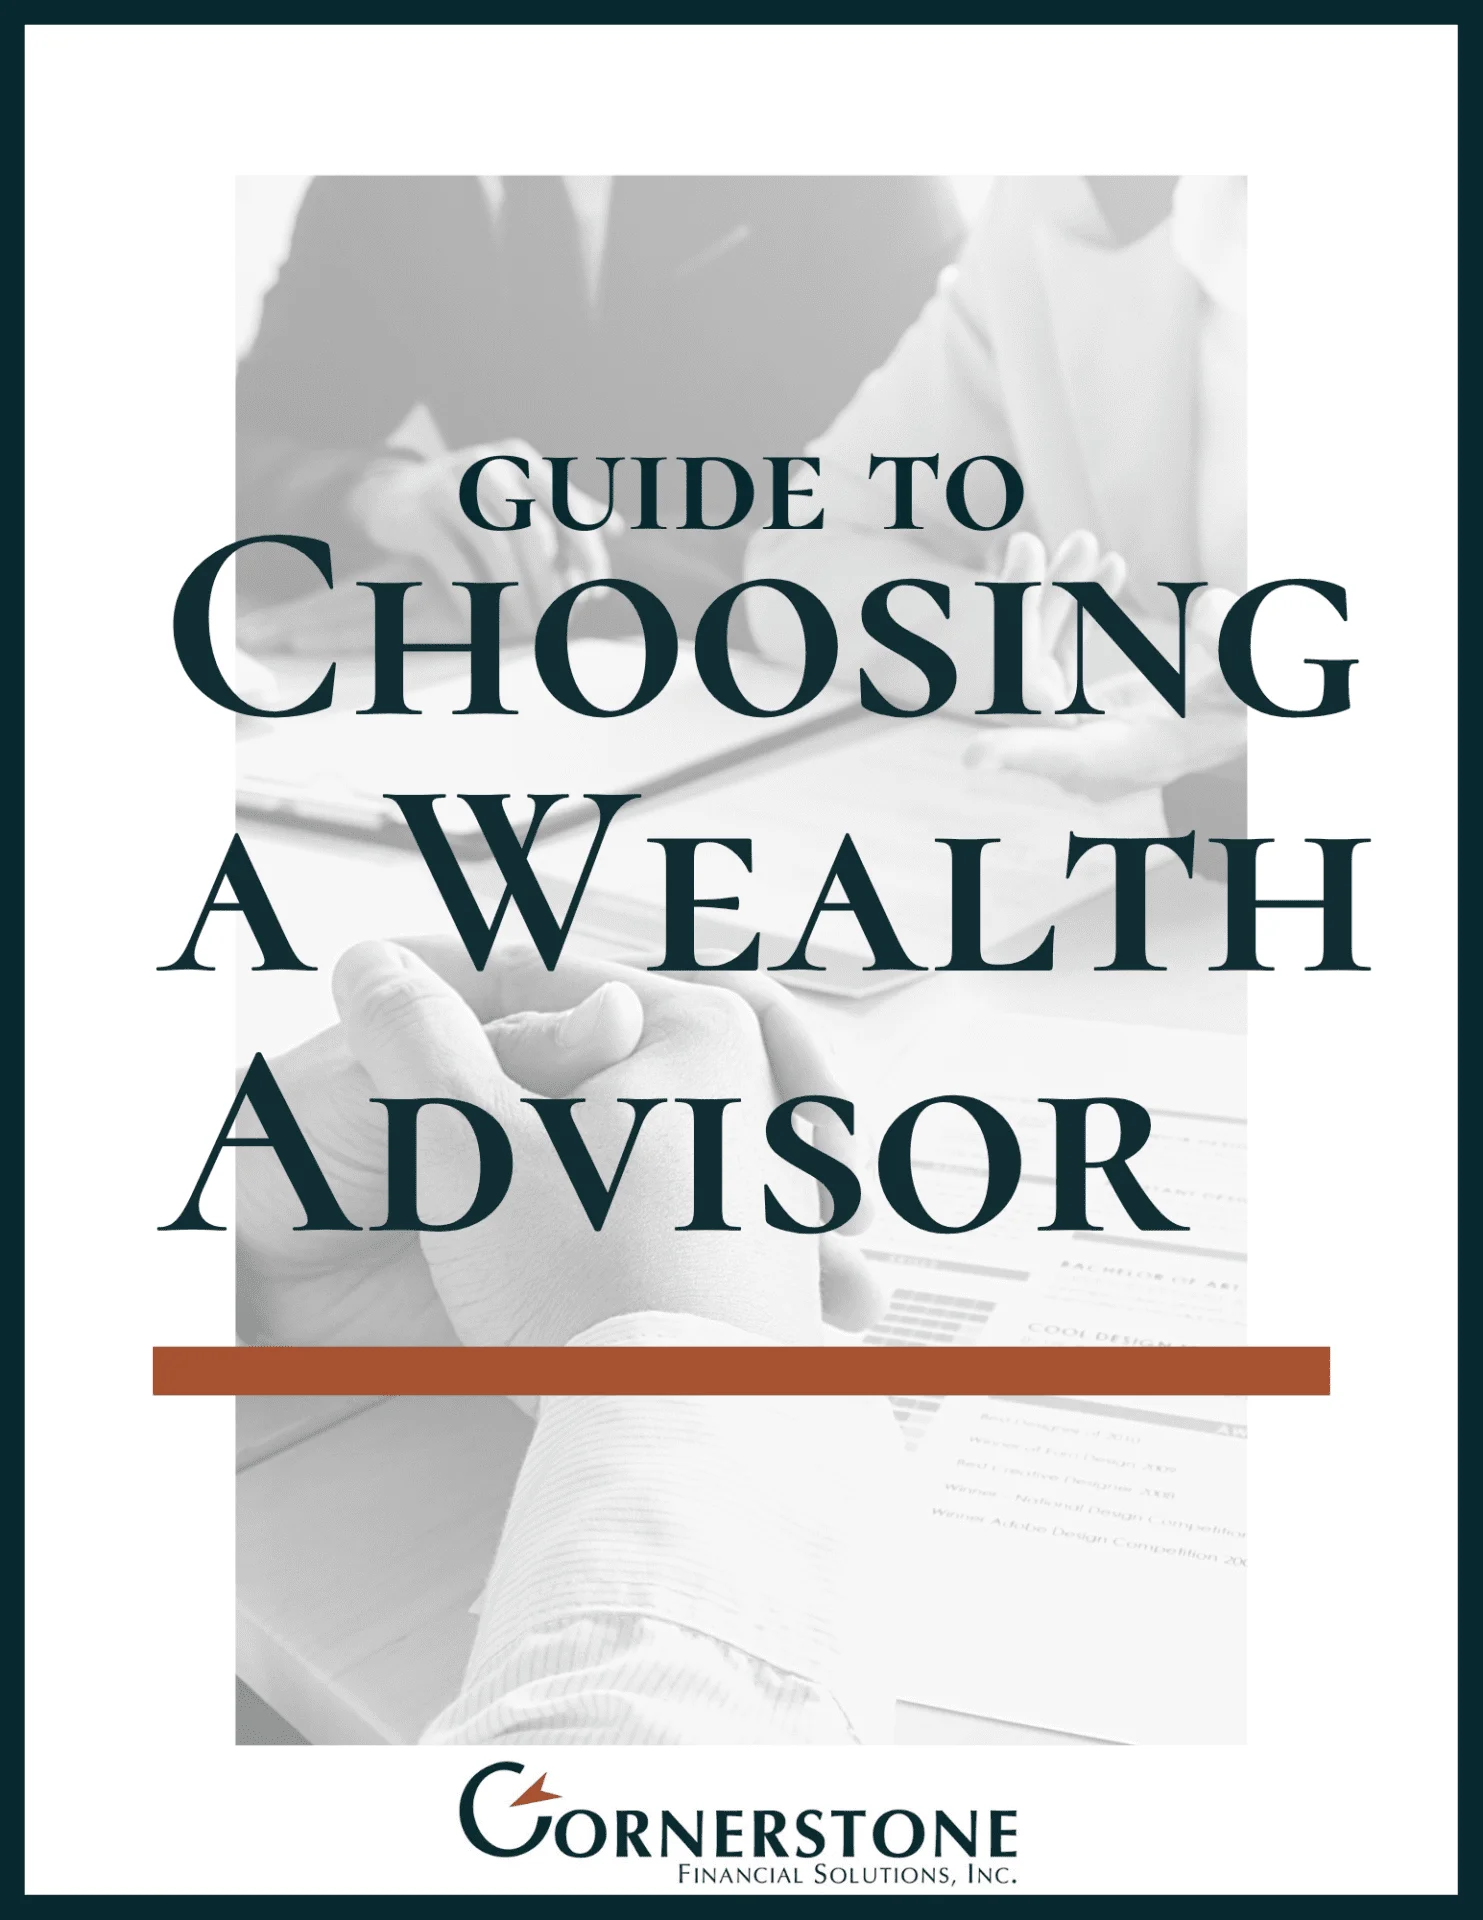 advisor, wealth advisor, guide, financial services, financial advisor